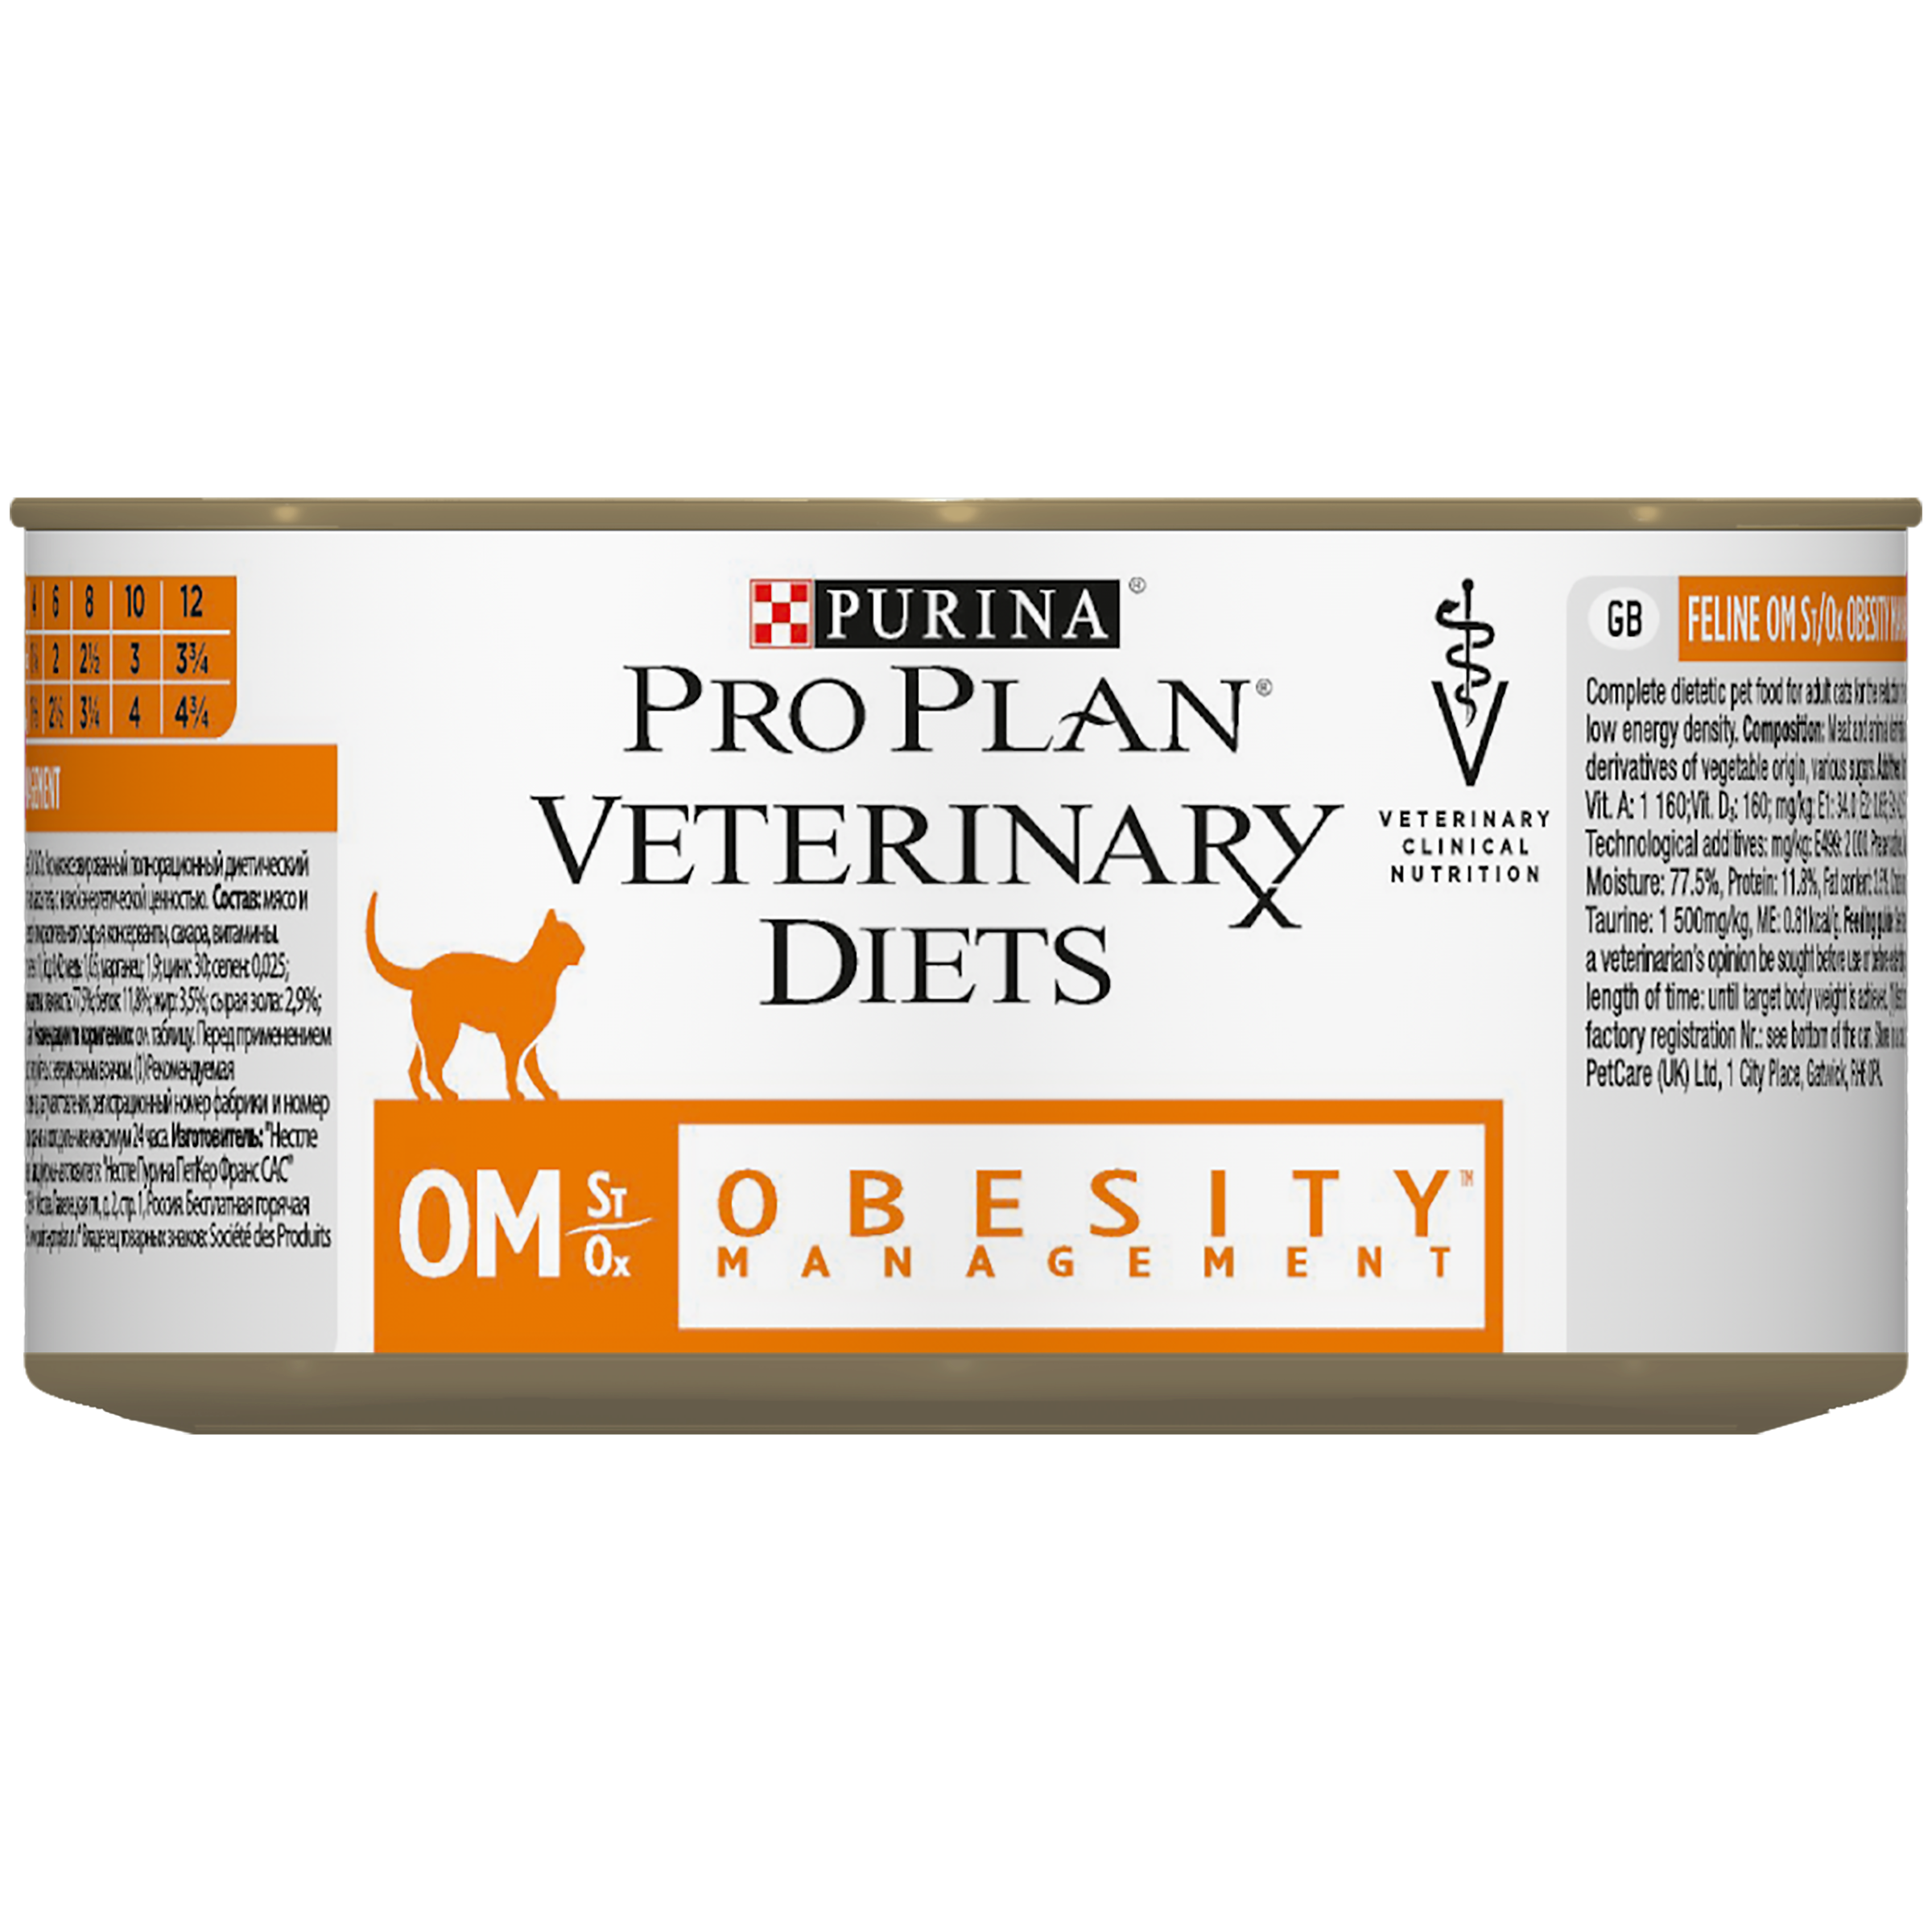 Pro plan veterinary diets цена. Pro Plan Veterinary Diets DM - консервы для кошек при диабете (банка) - 0,195 кг. Корм Pro meal. Корм Pro mуфд. Роял консервы ожирение.